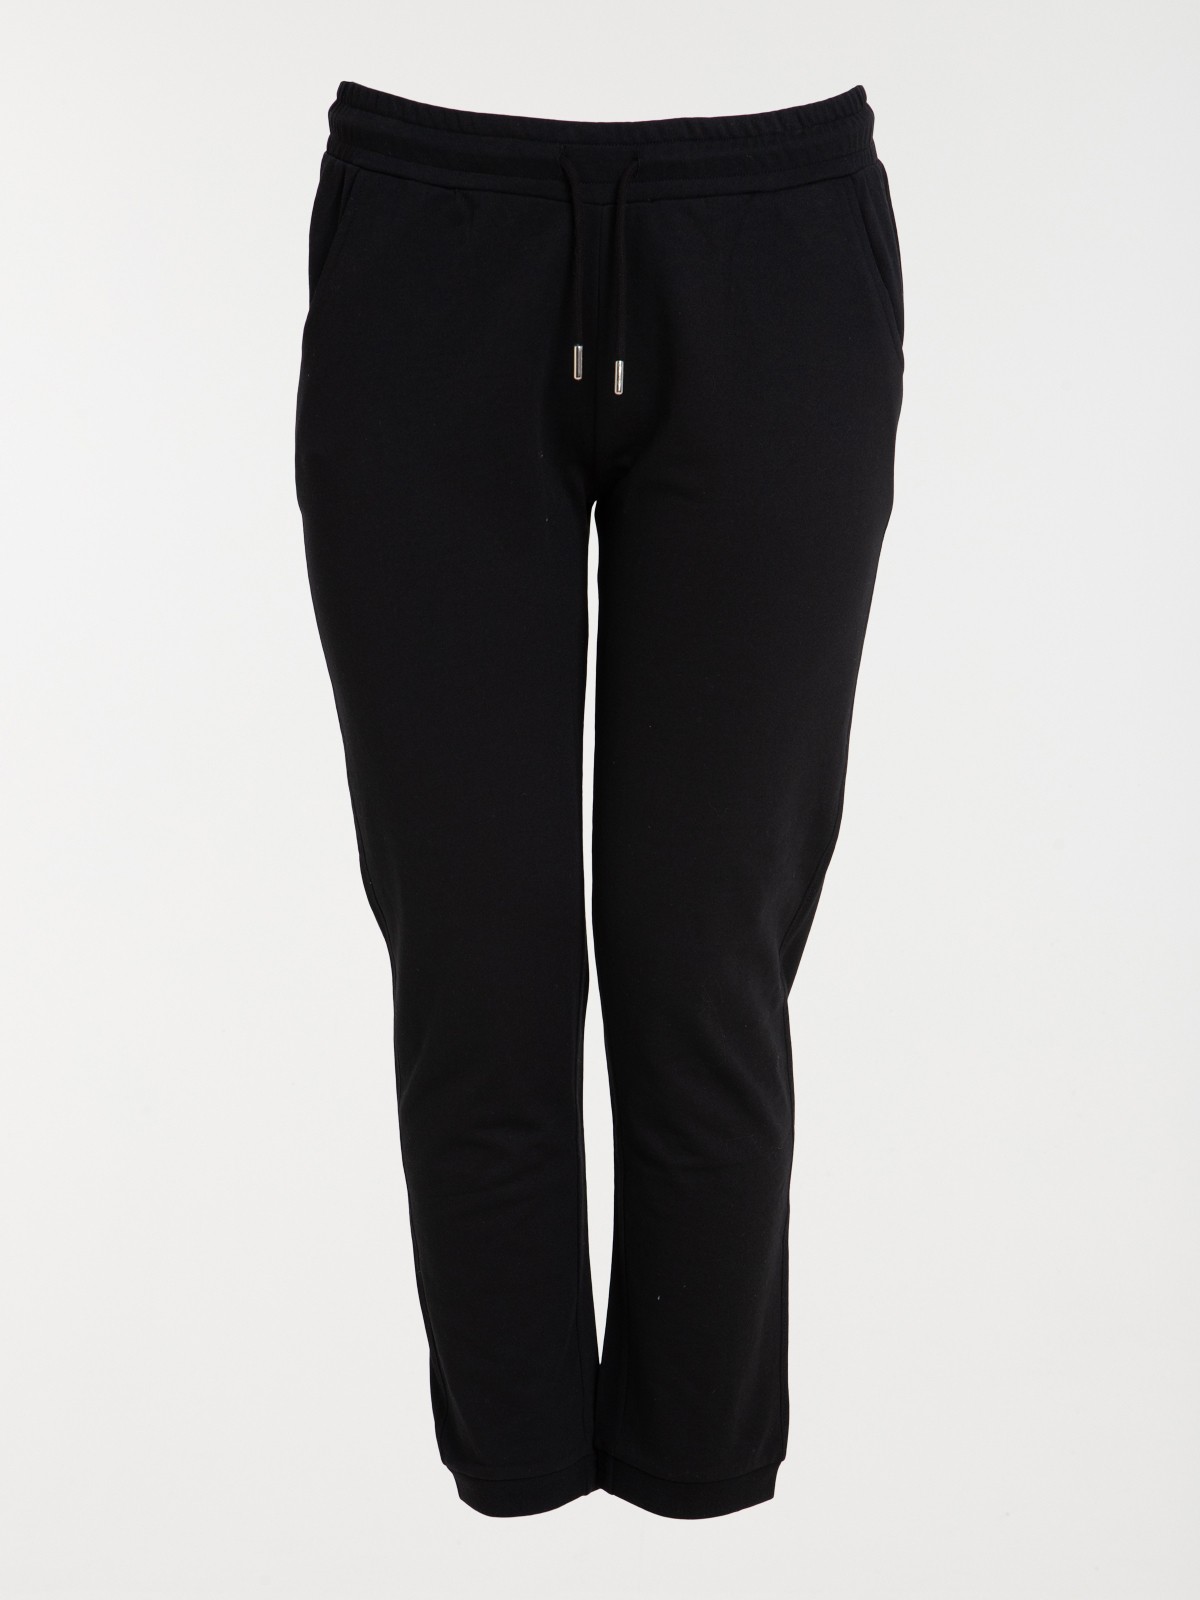 Pantalon sport noir grande taille femme - DistriCenter